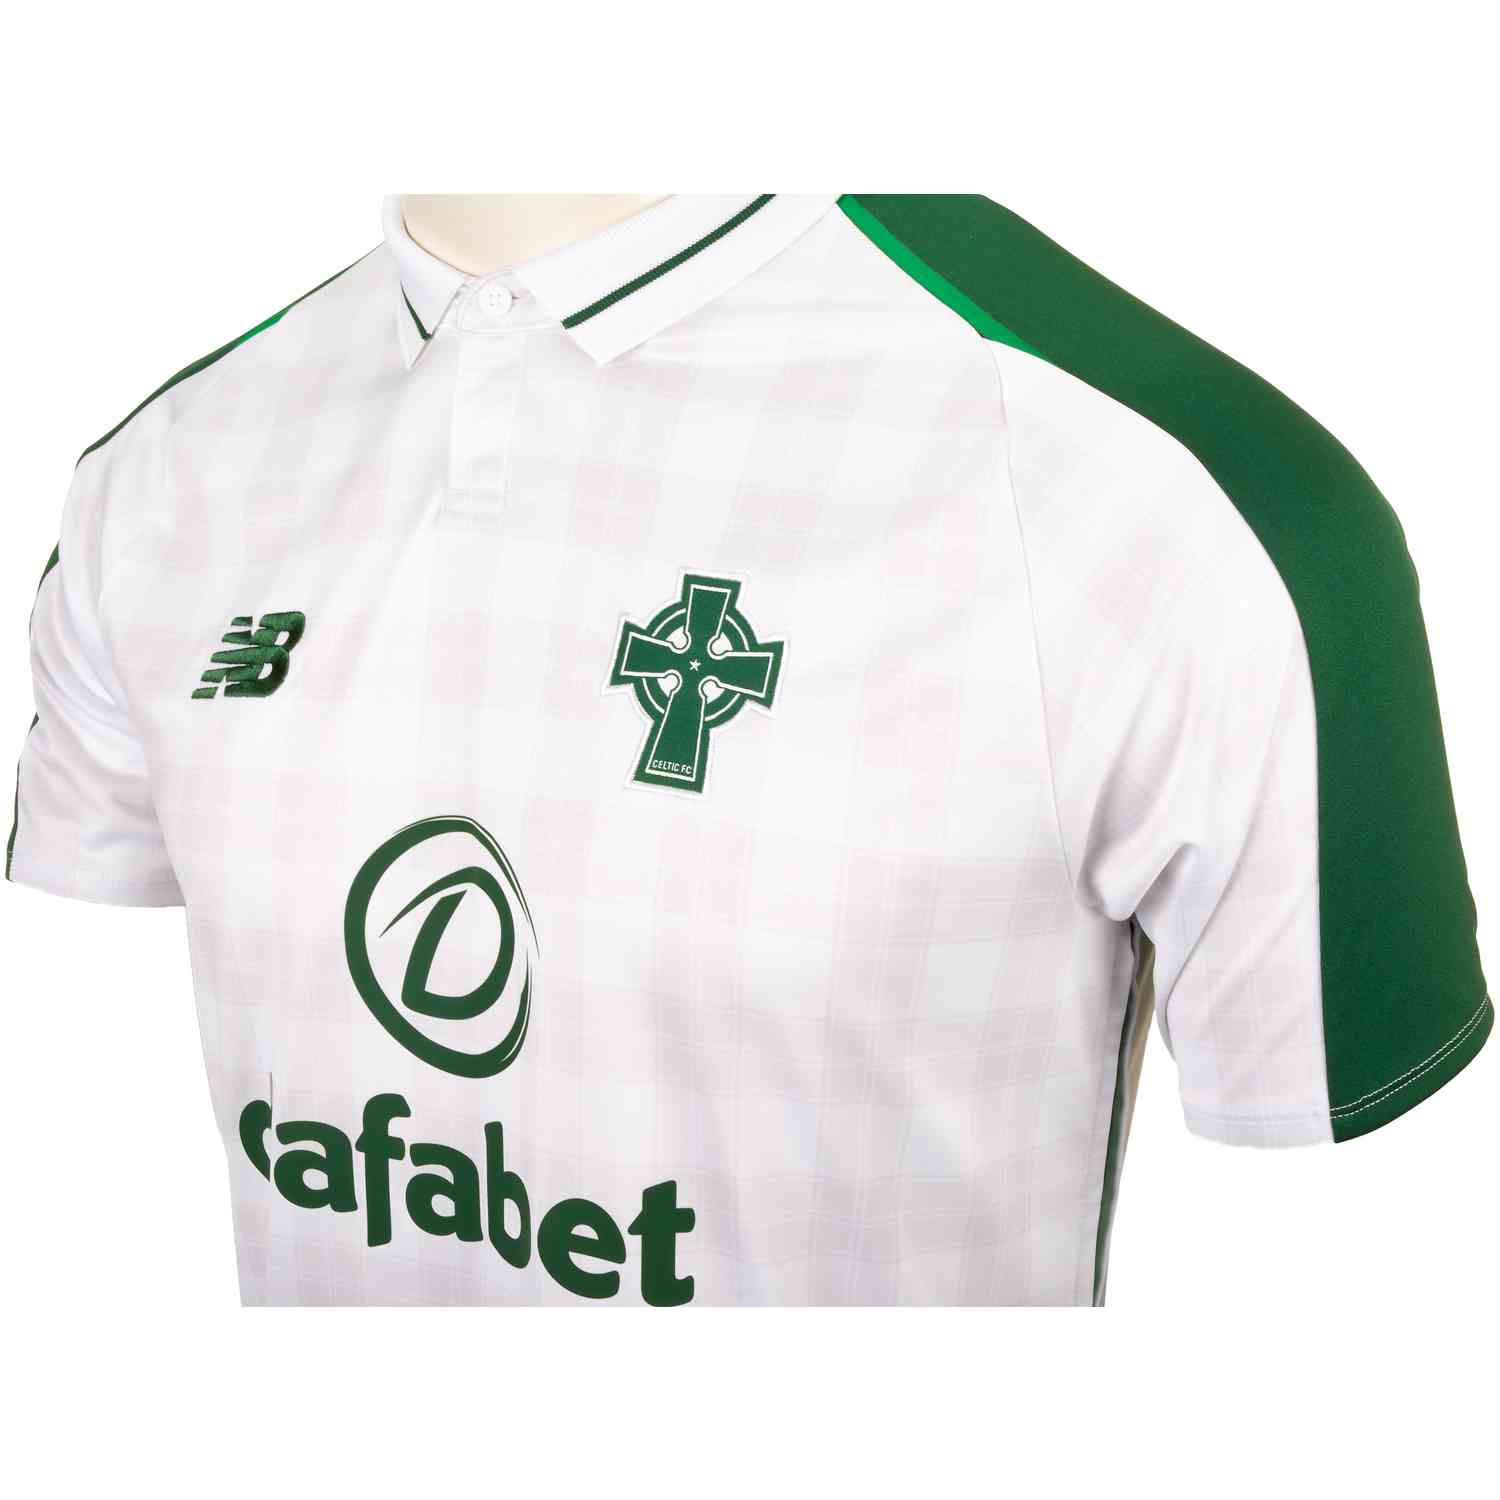 New Balance Men's Celtic Football Away Elite Jersey, Away, S : Buy